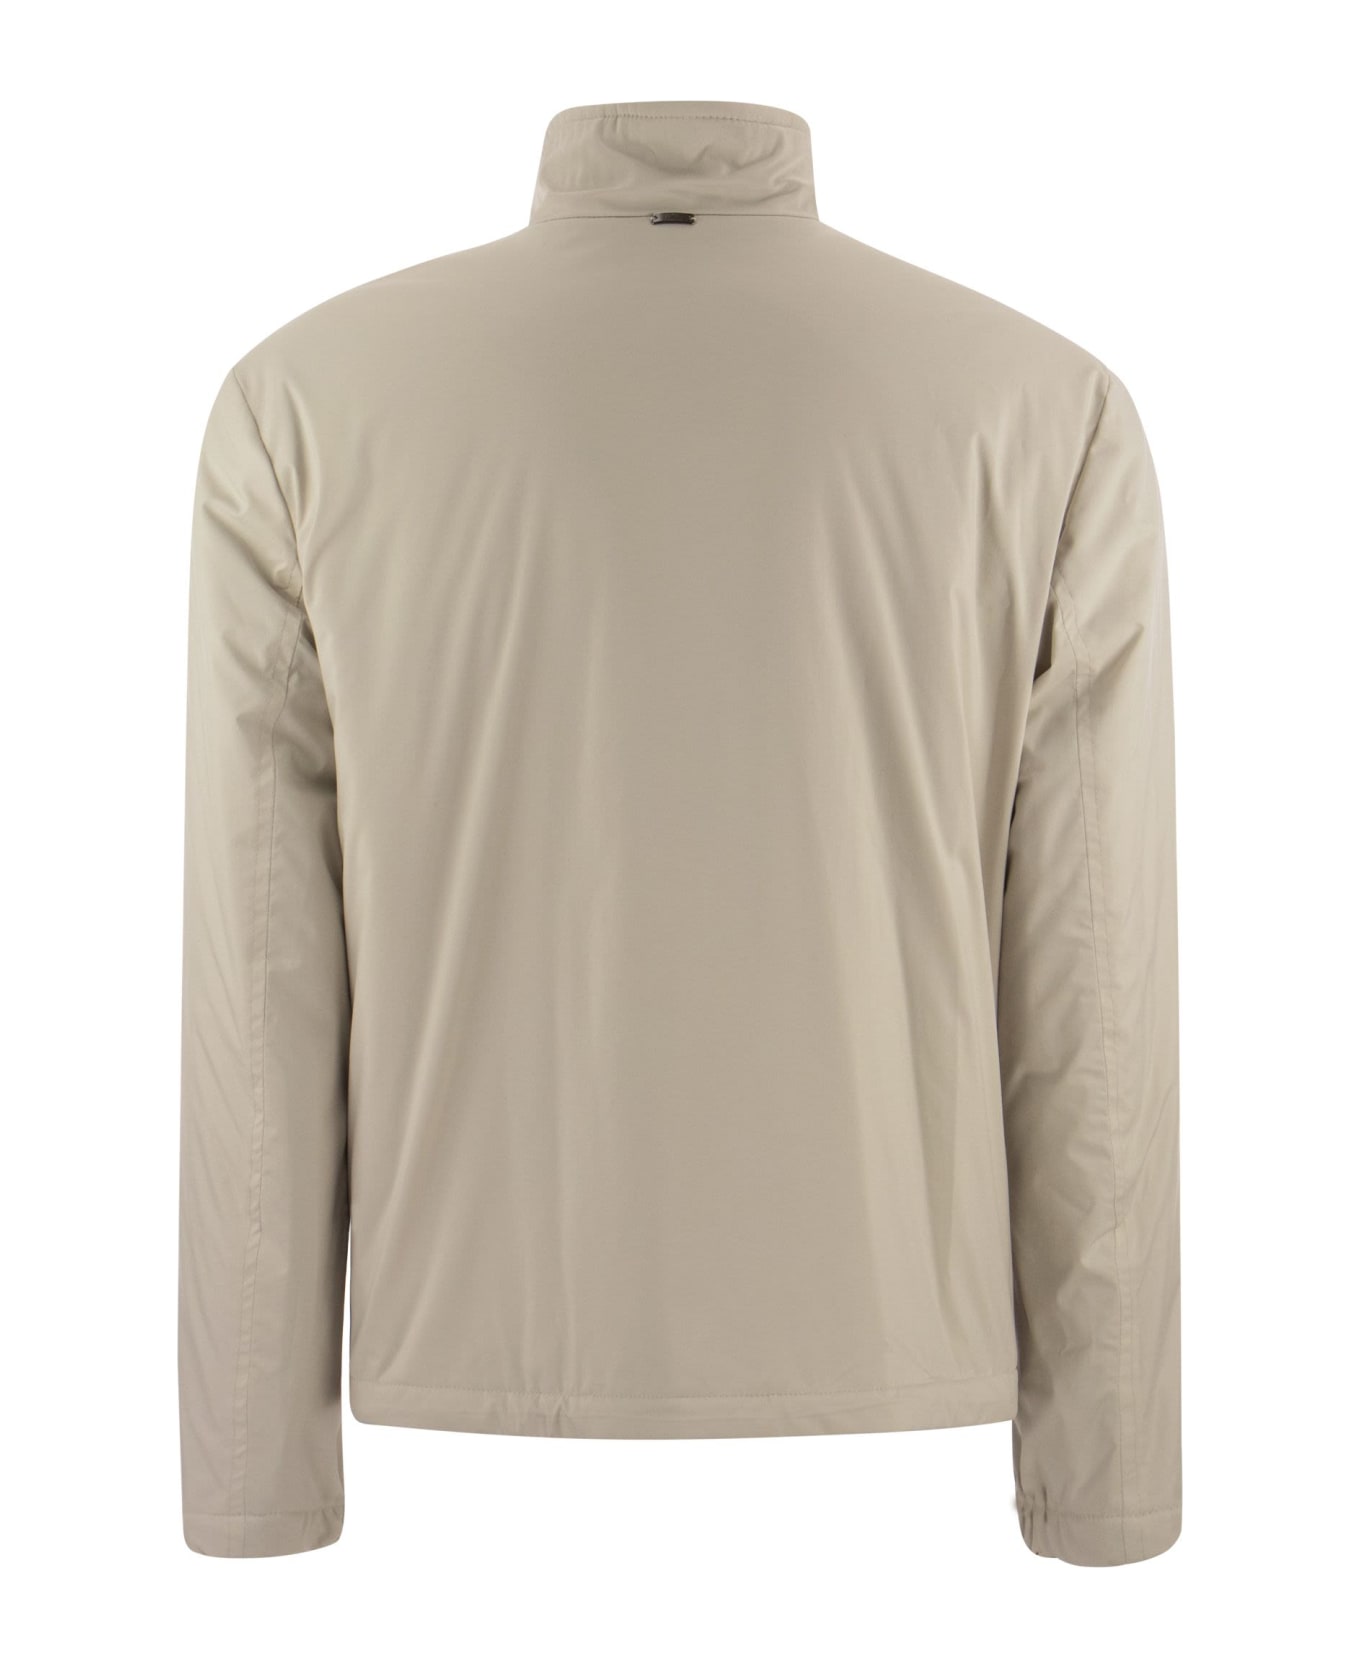 Fedeli Cashmere Lined Jacket - Cream/grey